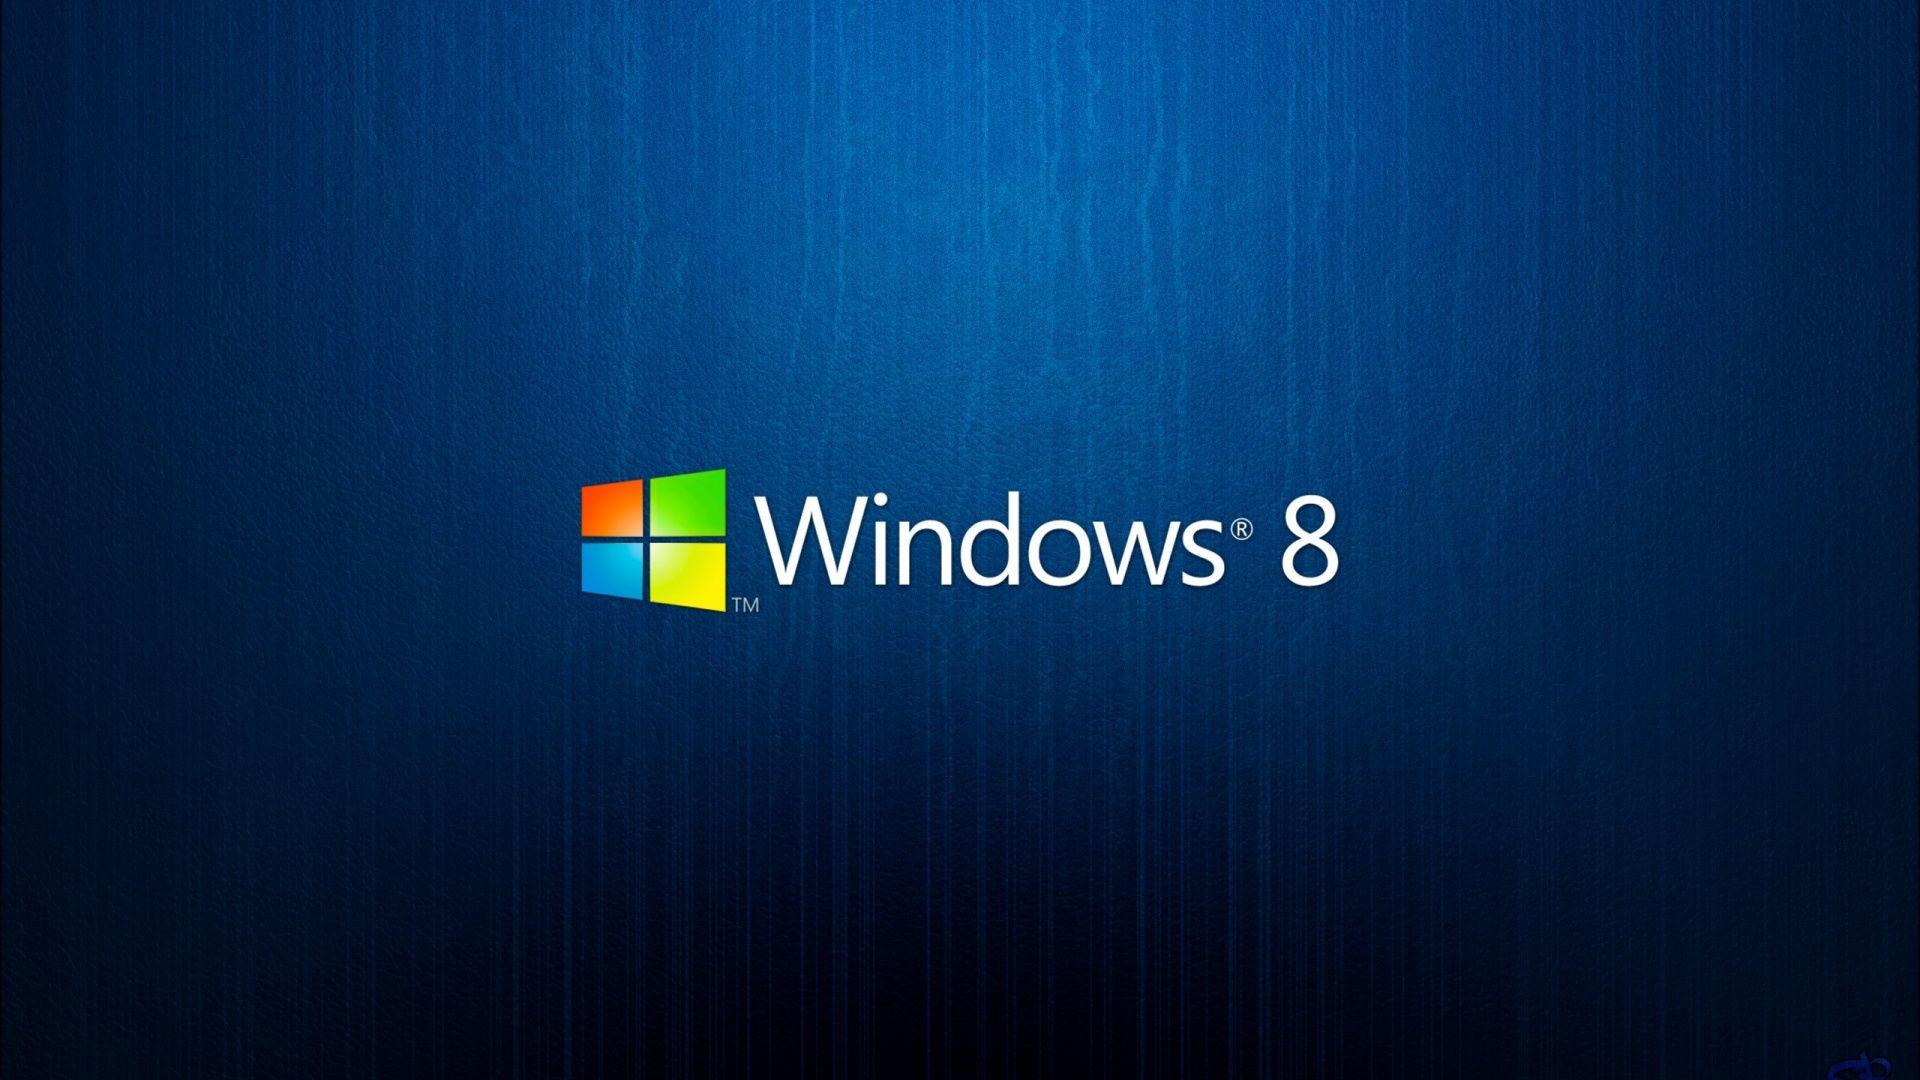 Windows 8 Wallpaper HD 18 Background. Wallruru